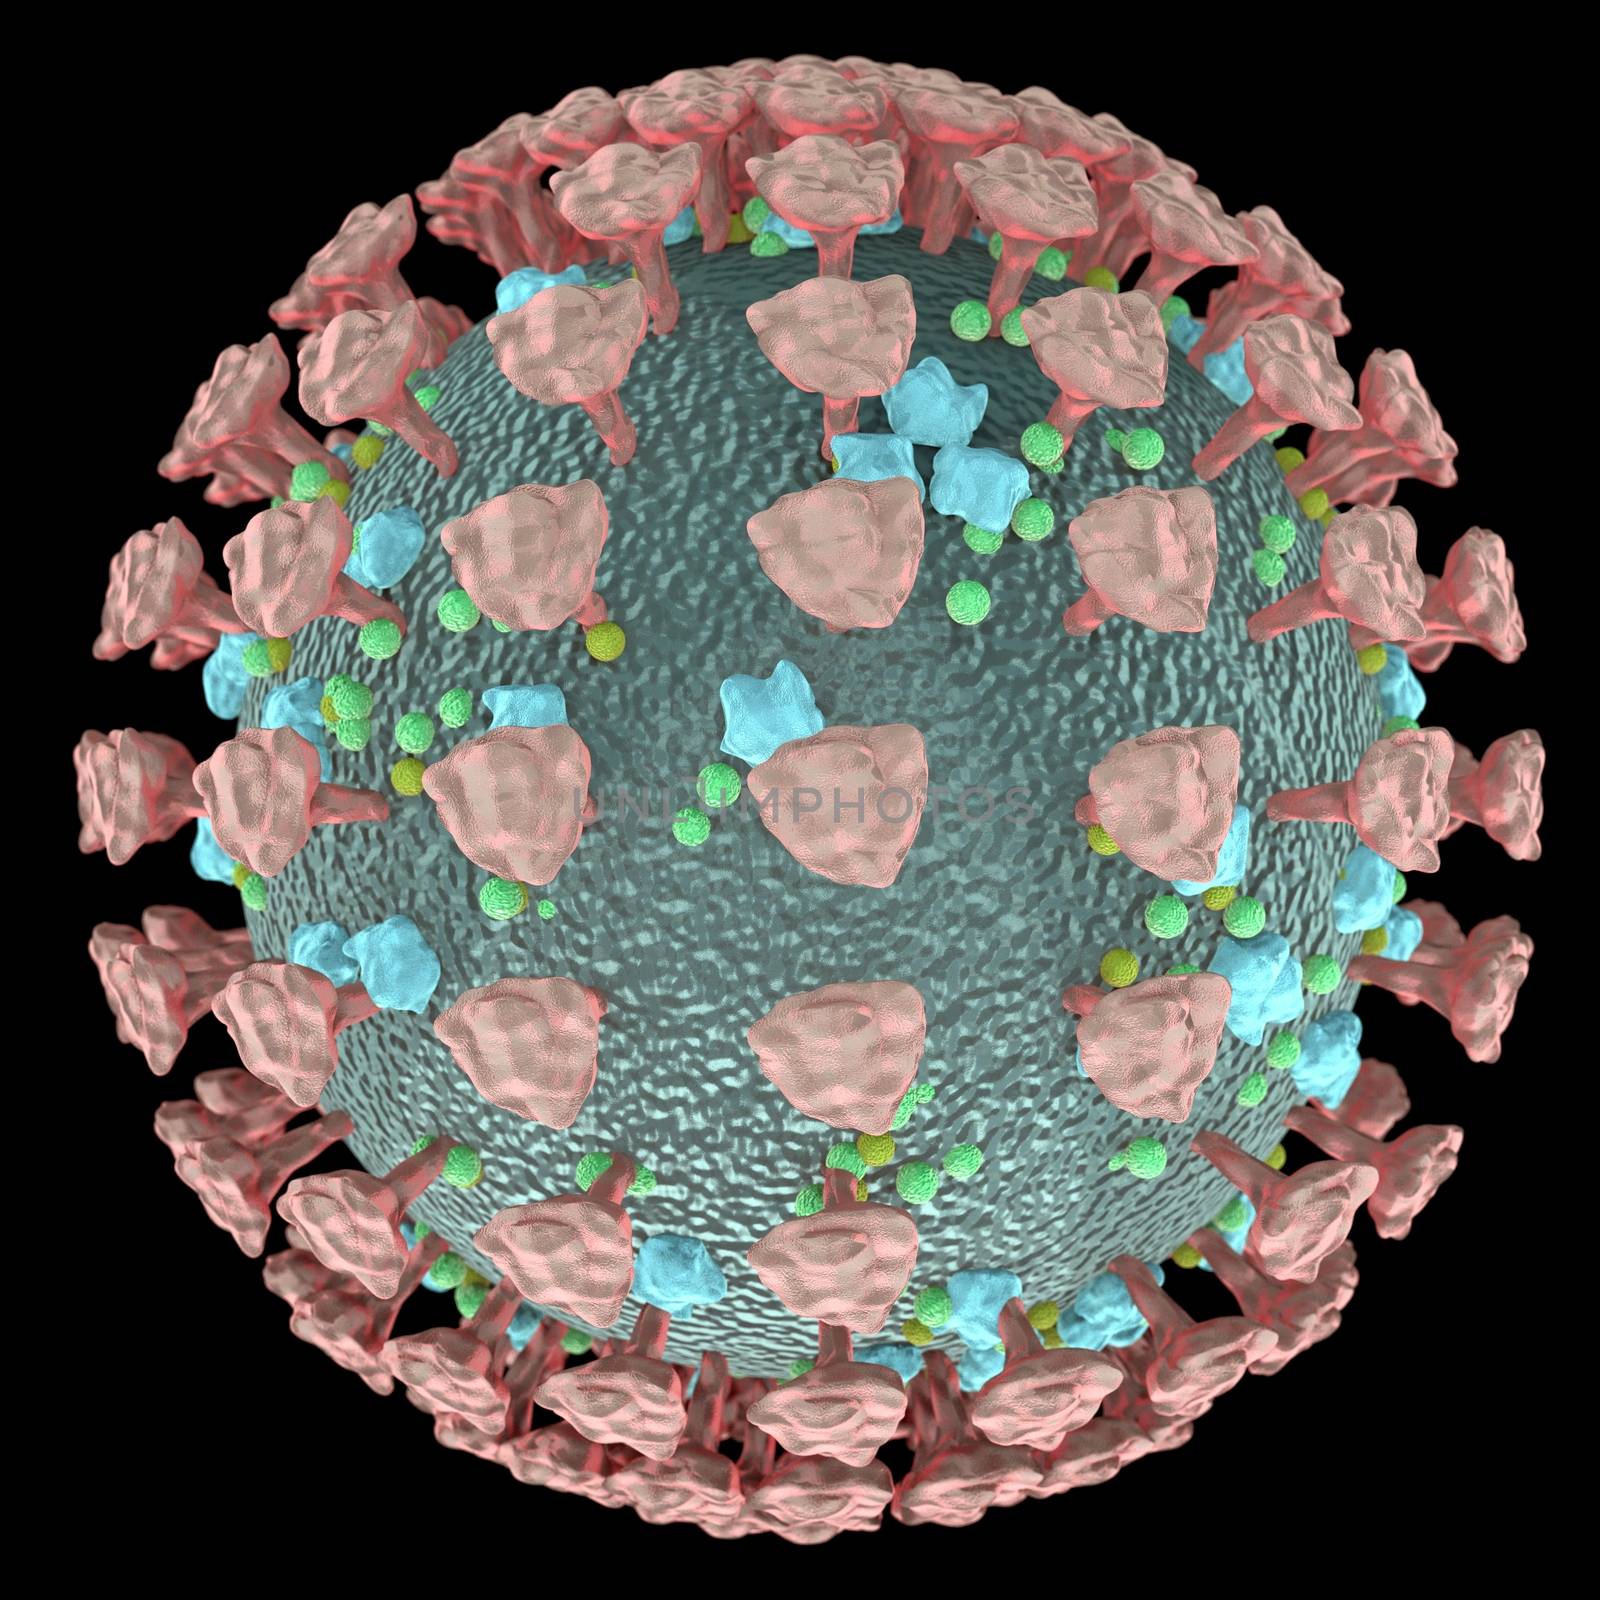 Corona virus cells SARS-CoV-2 over background. 3d Illustration.